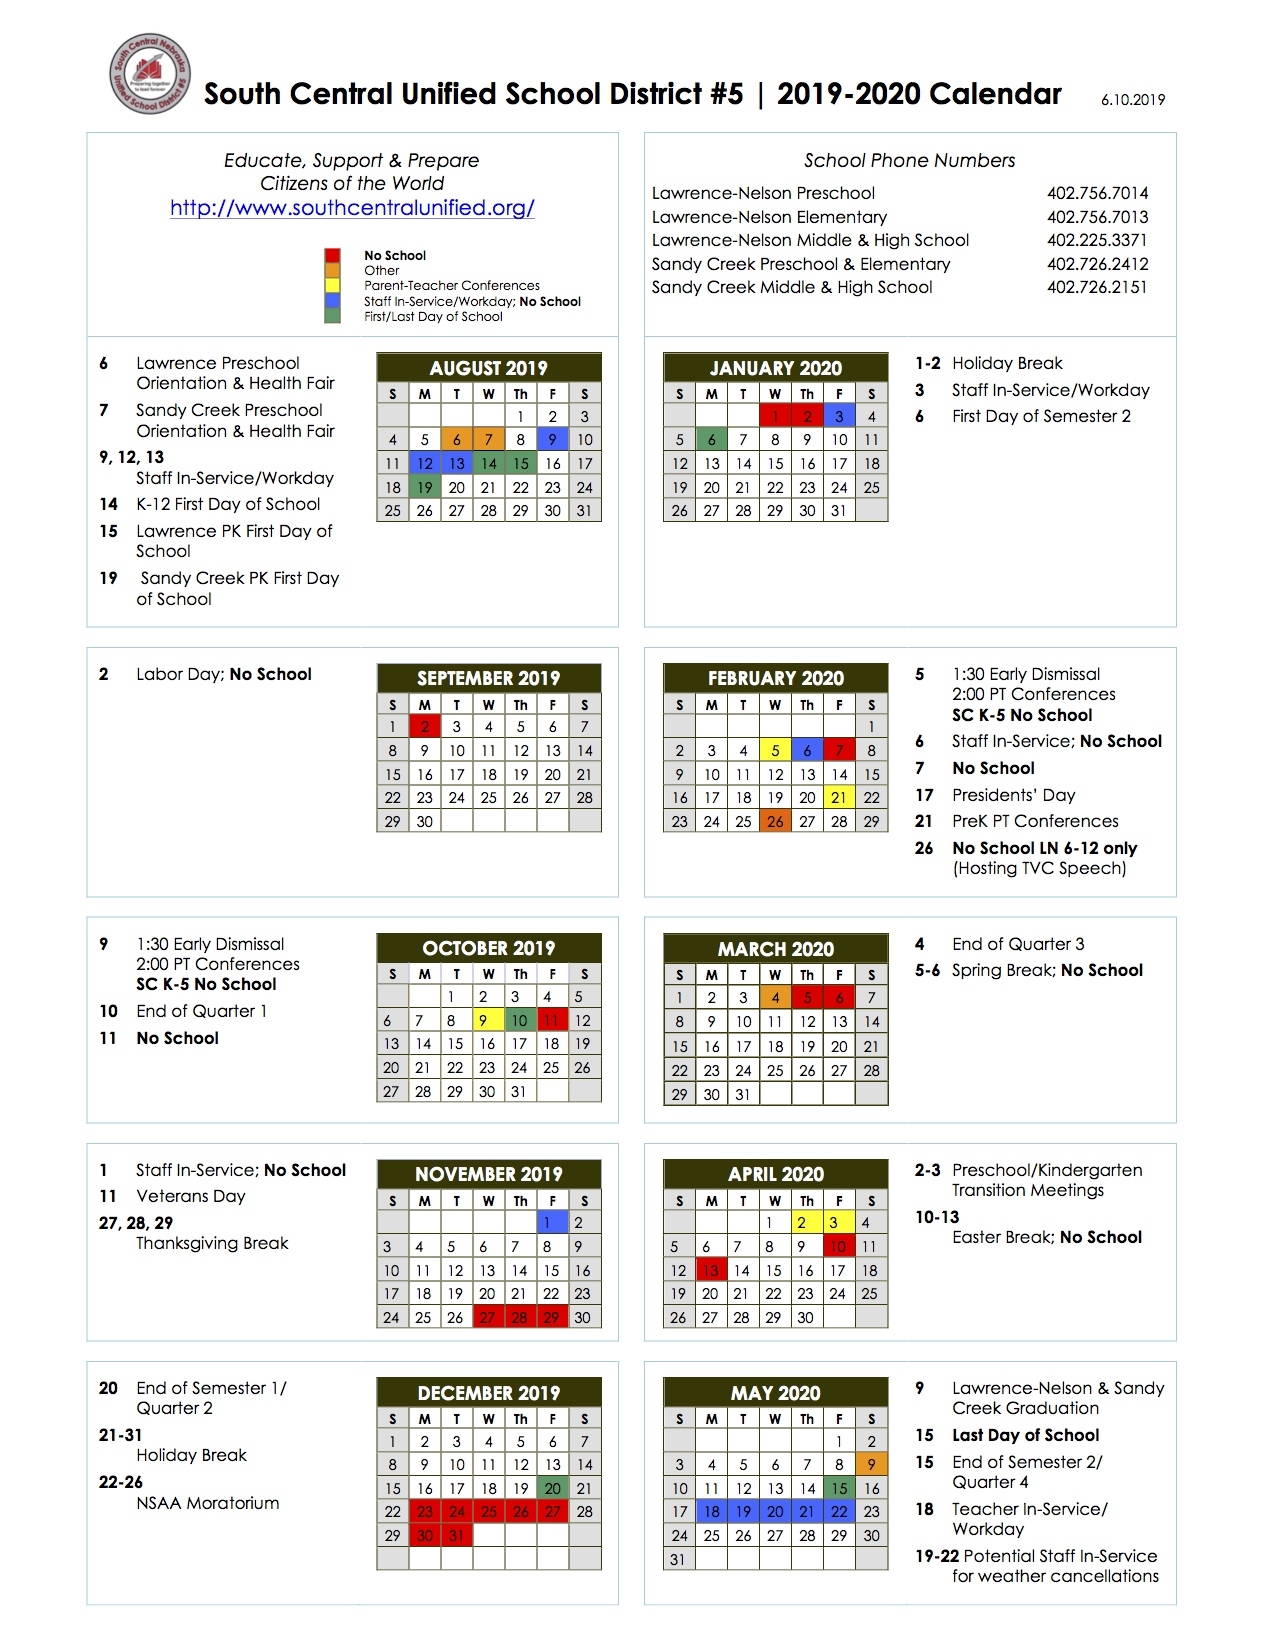 South Central Usd 5 District 7 School Calendar Grants Pass